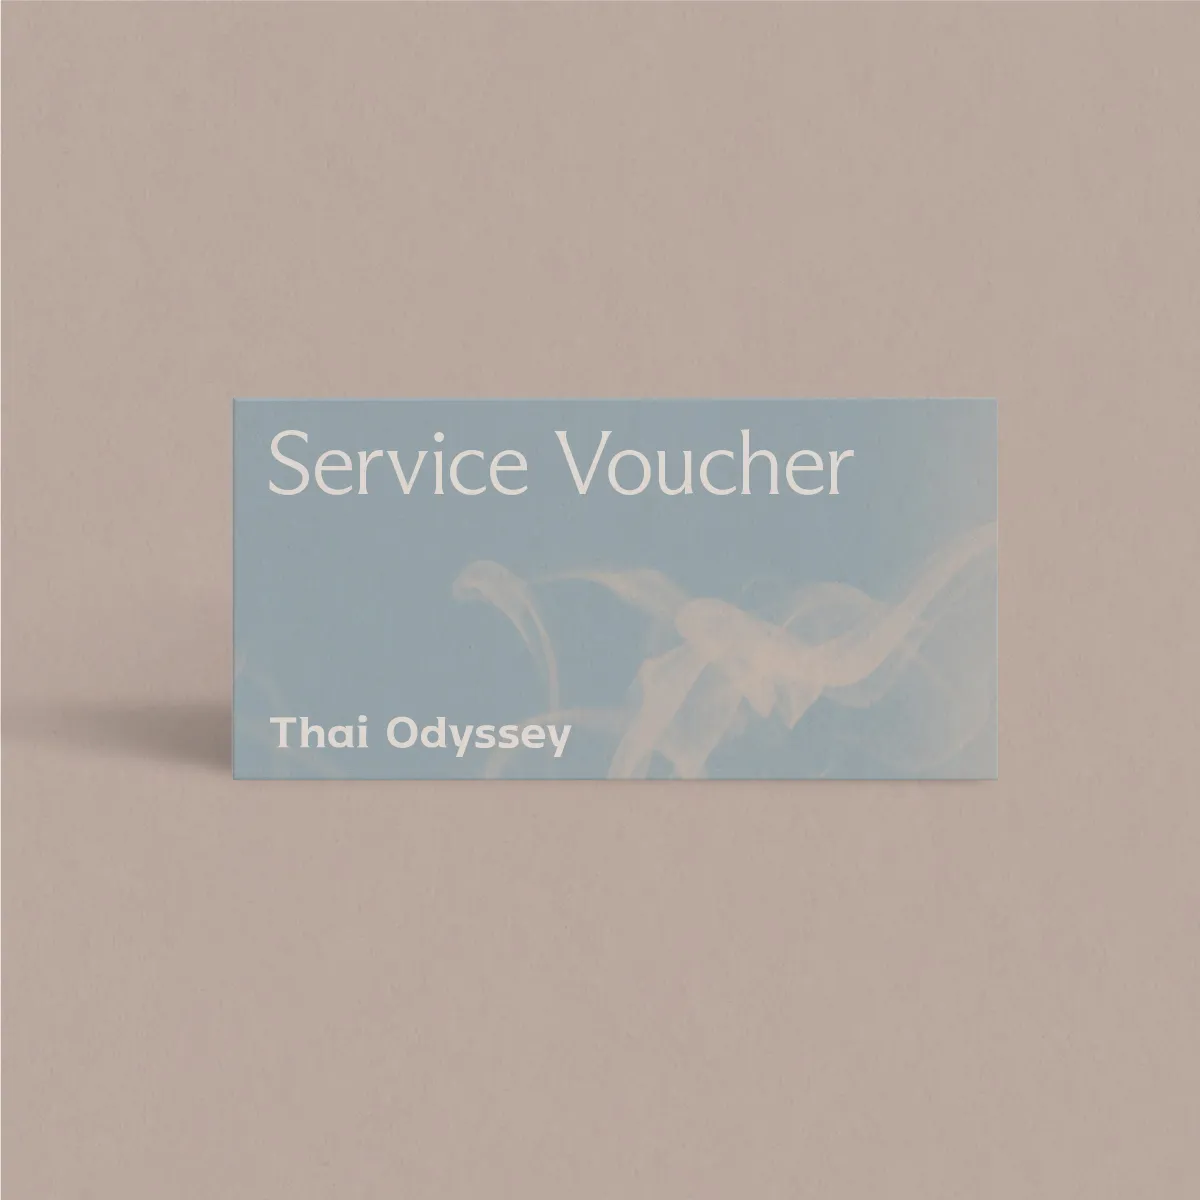 Service-Voucher_03_Post_v3